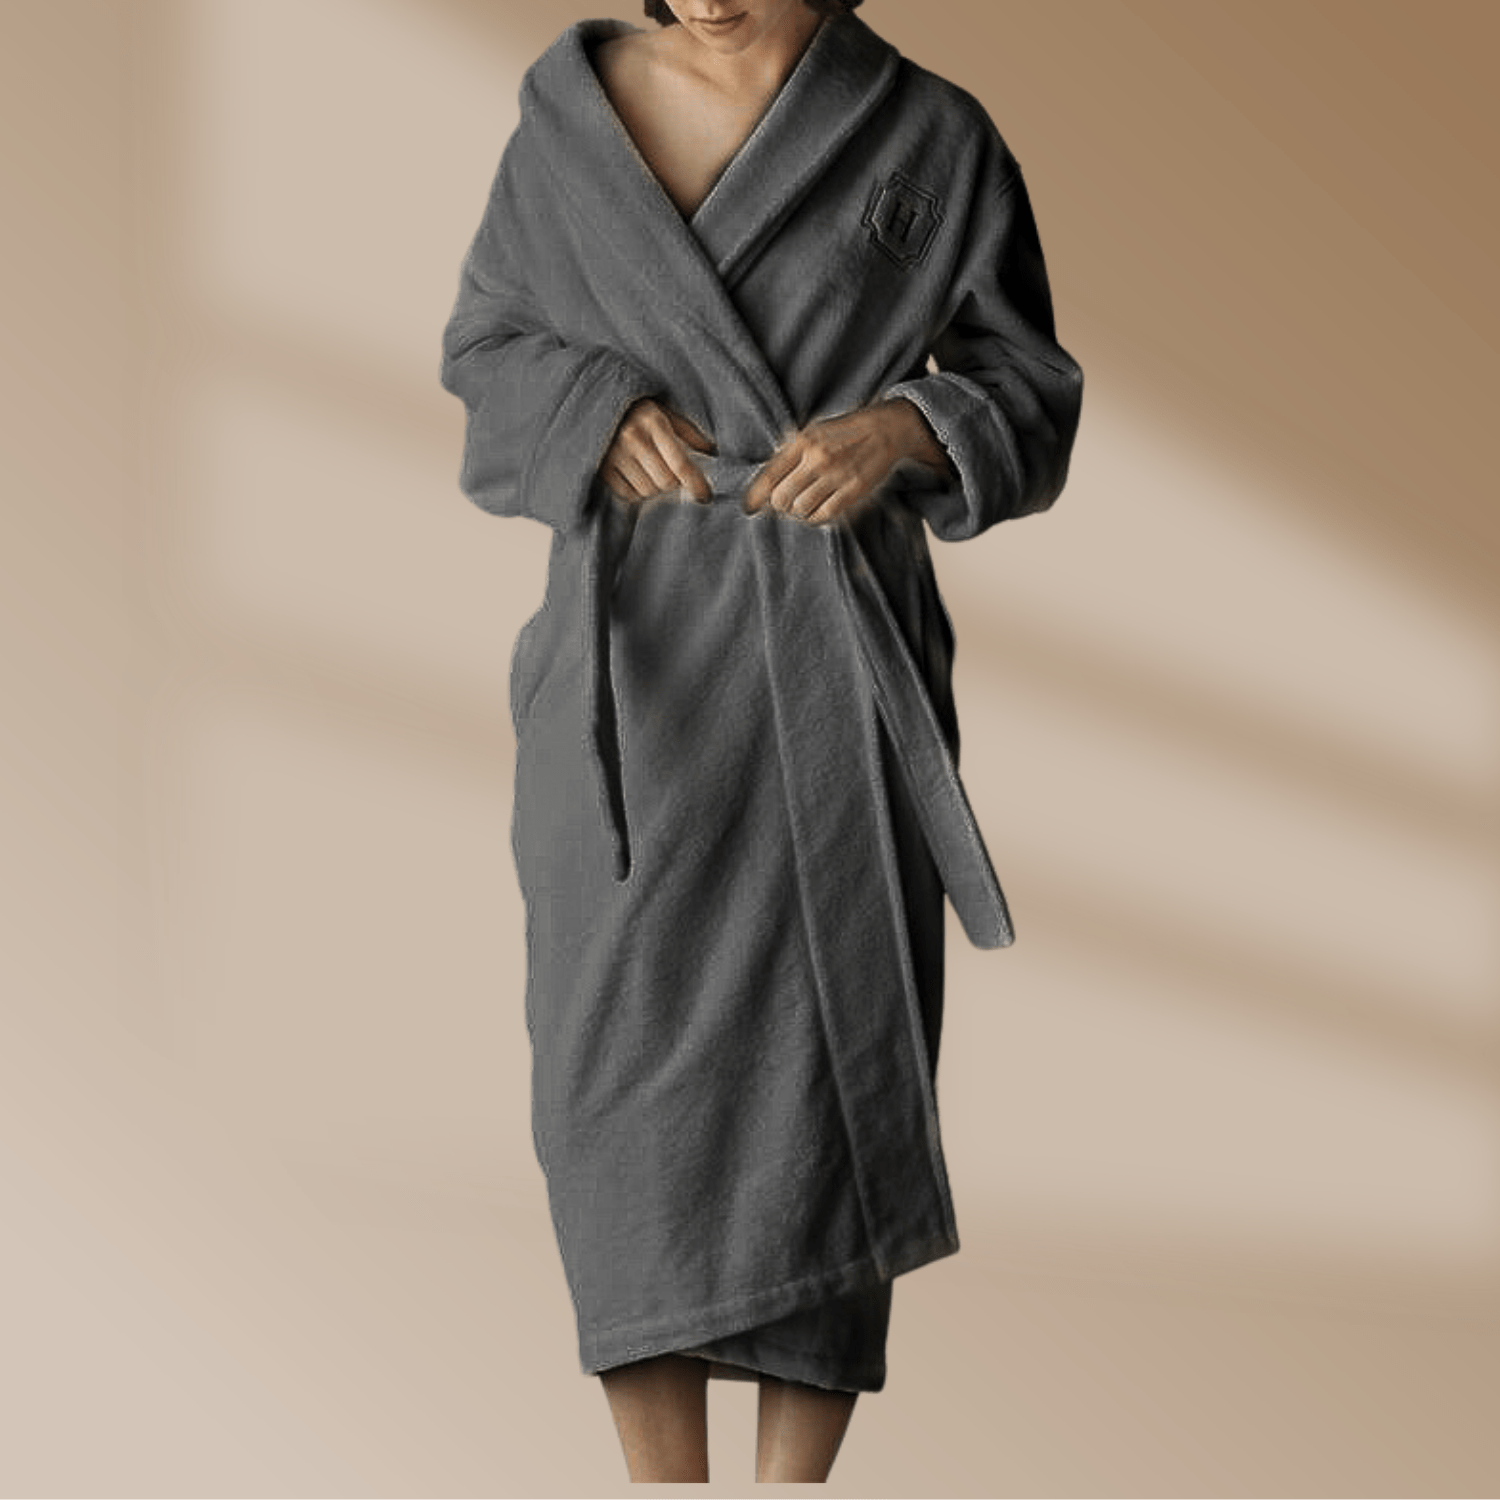 Luxury shower robe, Terry Towel Morning Shower Bath Robe for women and men online